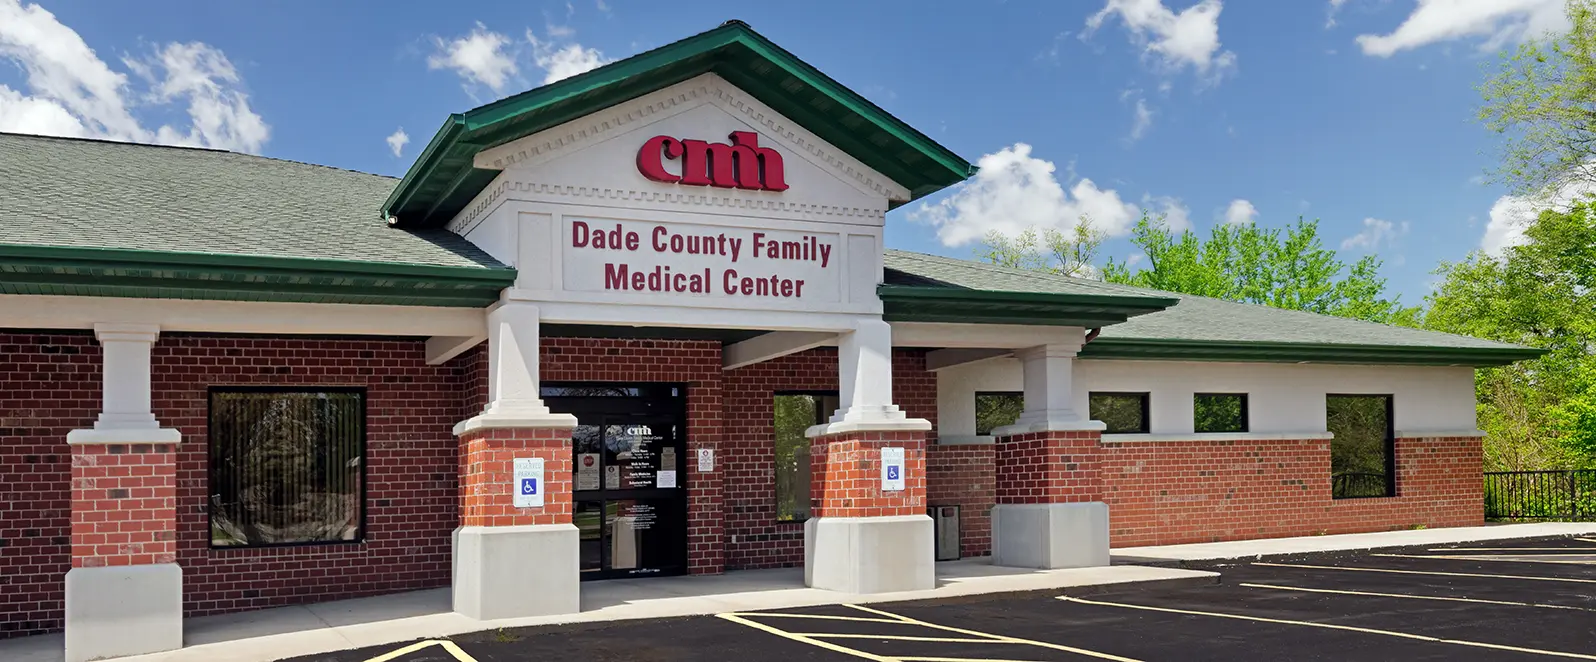 Dade County Family Medical Center building exterior